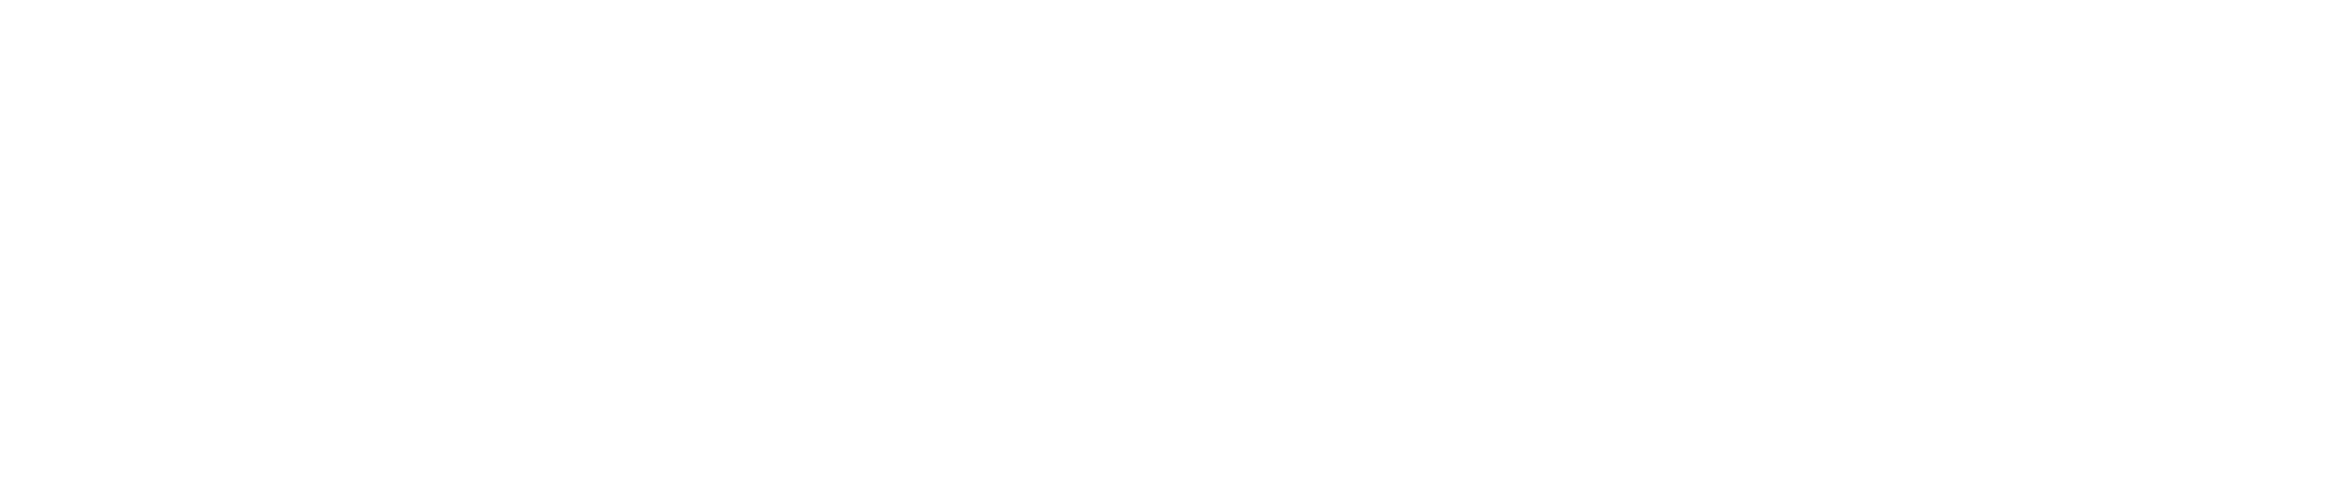 Ruminant Health & Welfare Logo White